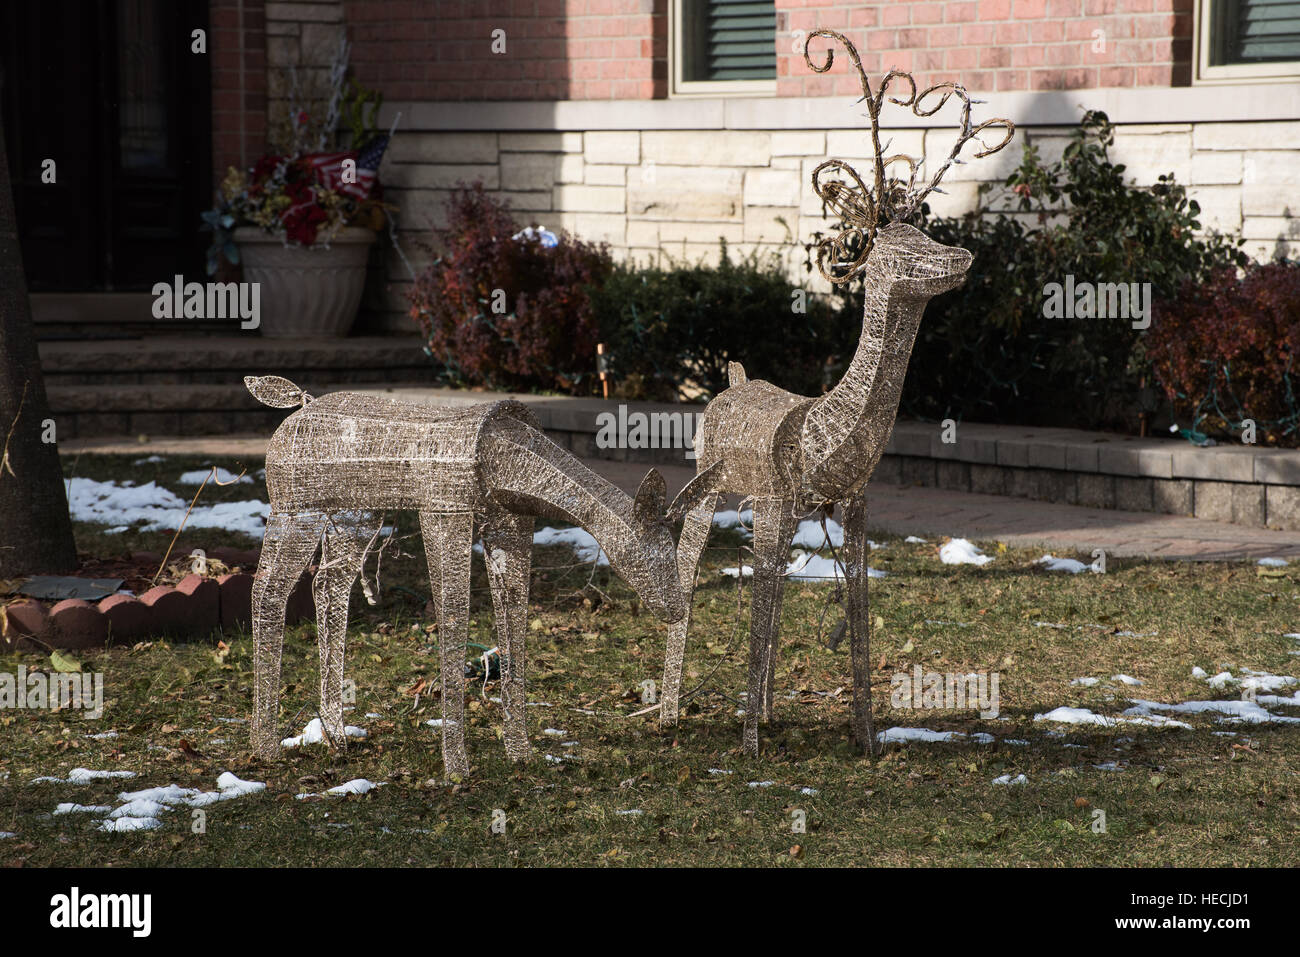 Deer outside Christmas decoration Stock Photo